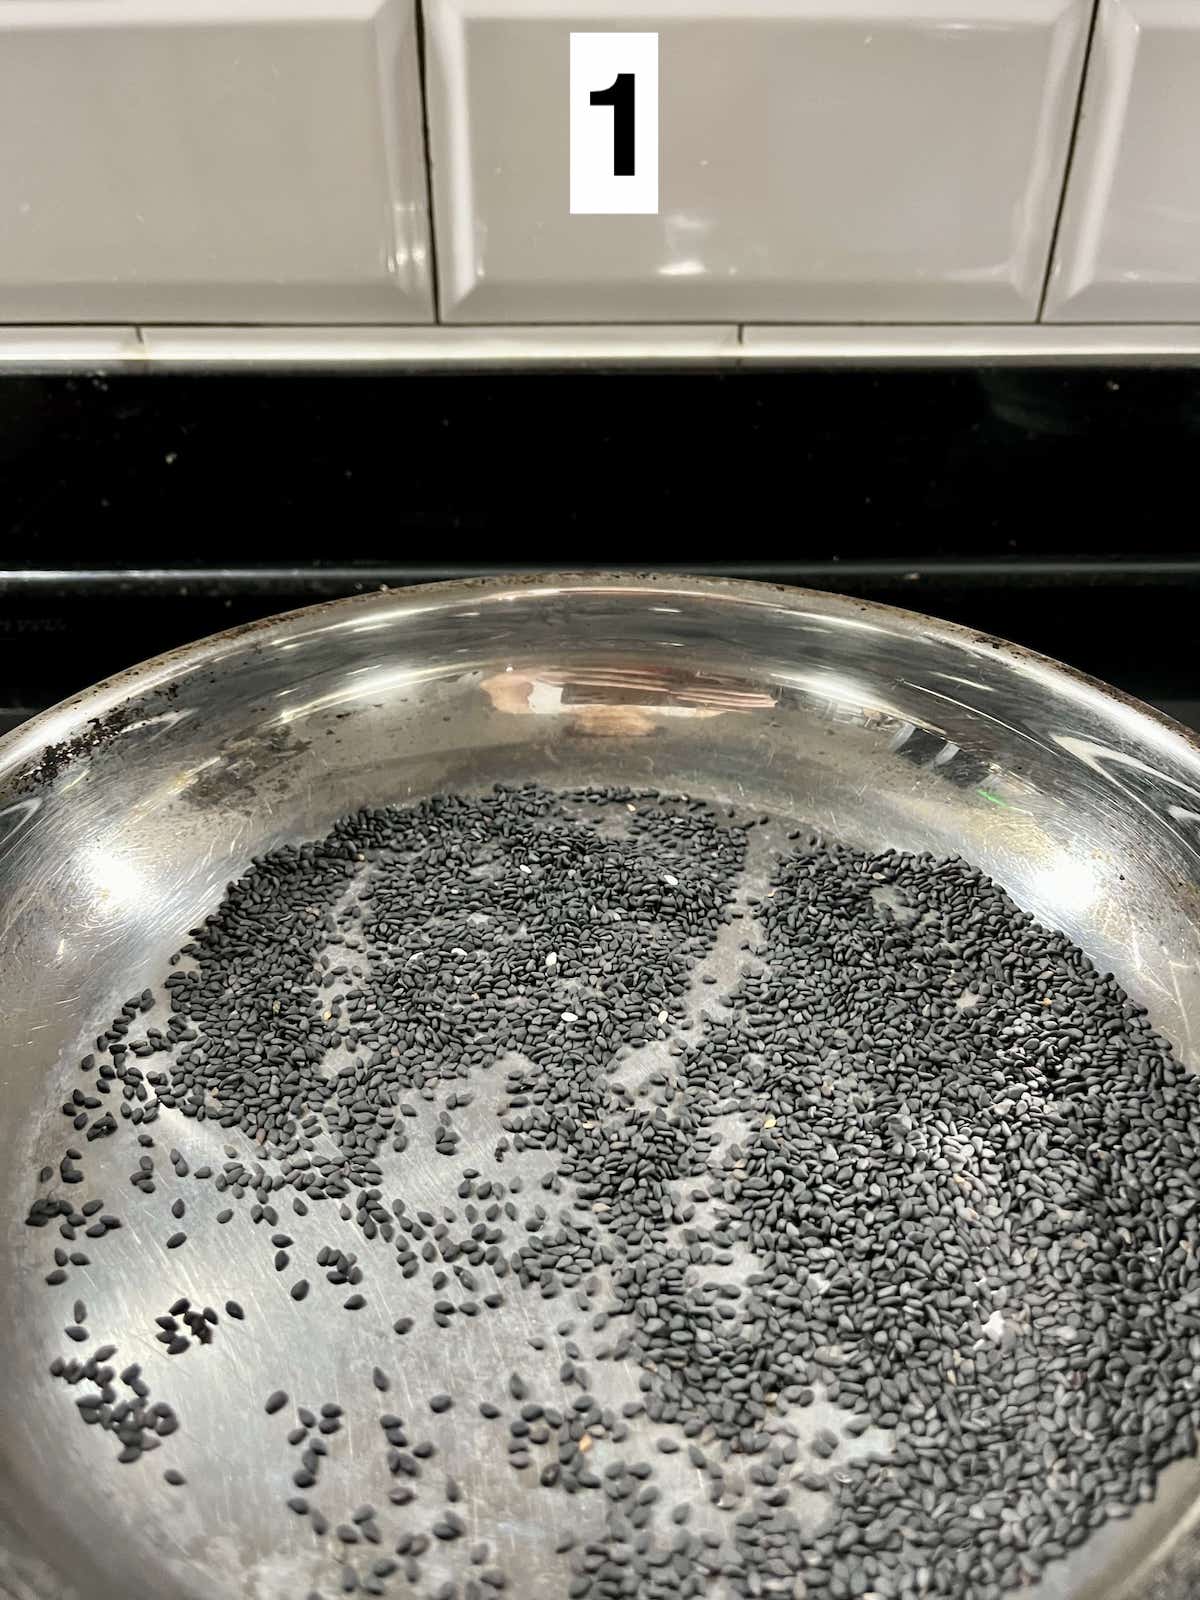 Dry frying black sesame seeds over low heat.